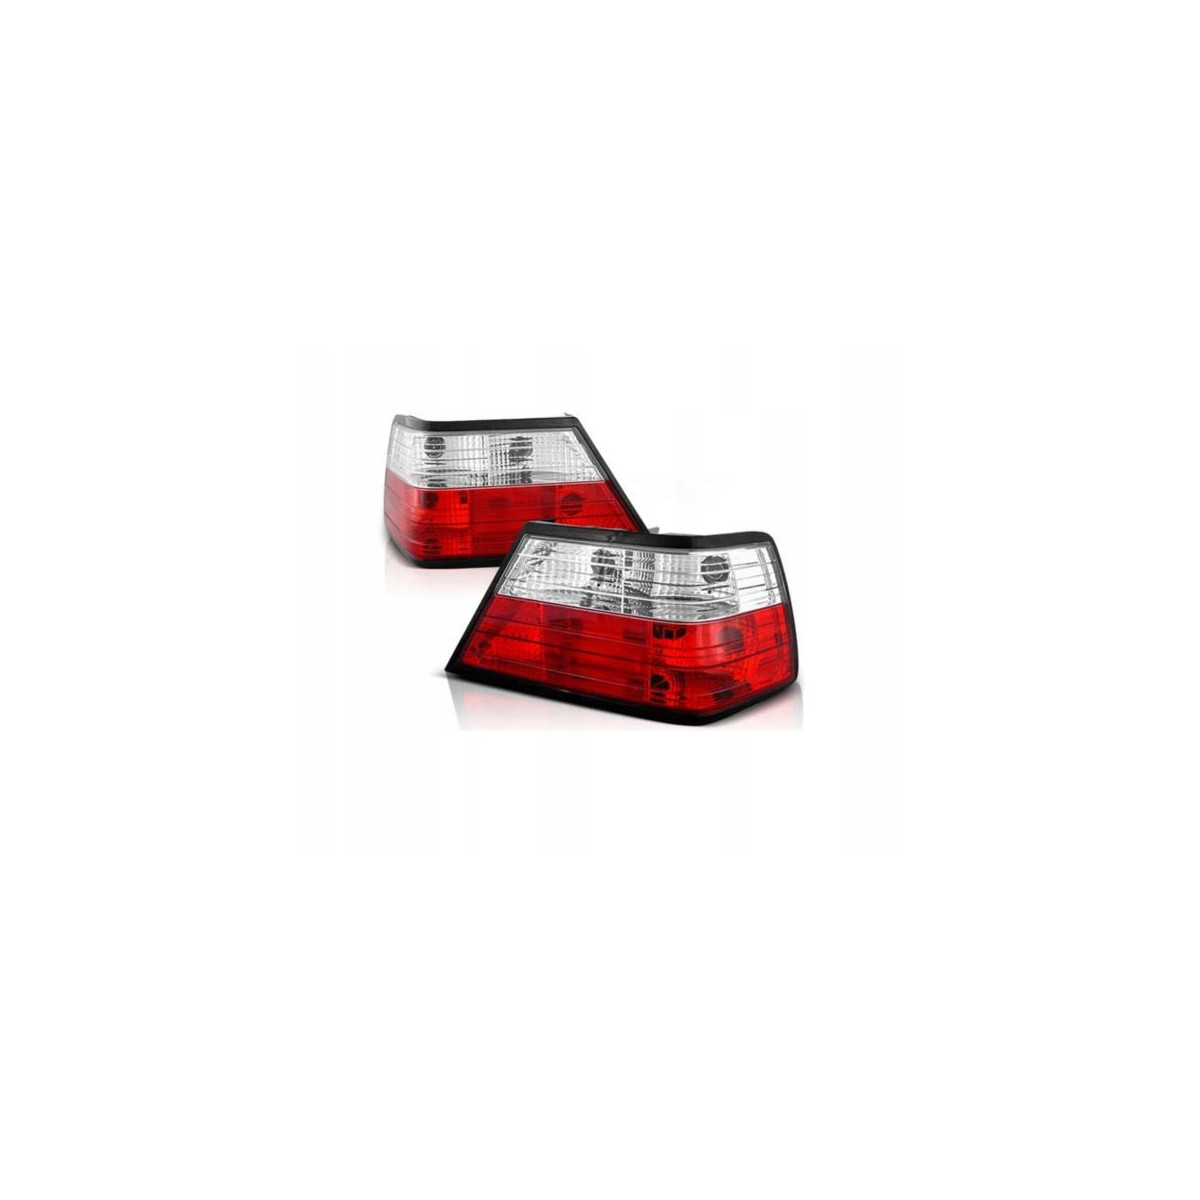 Lampy tyl Tuning RedWhite Mercedes E 124 84-96 z24